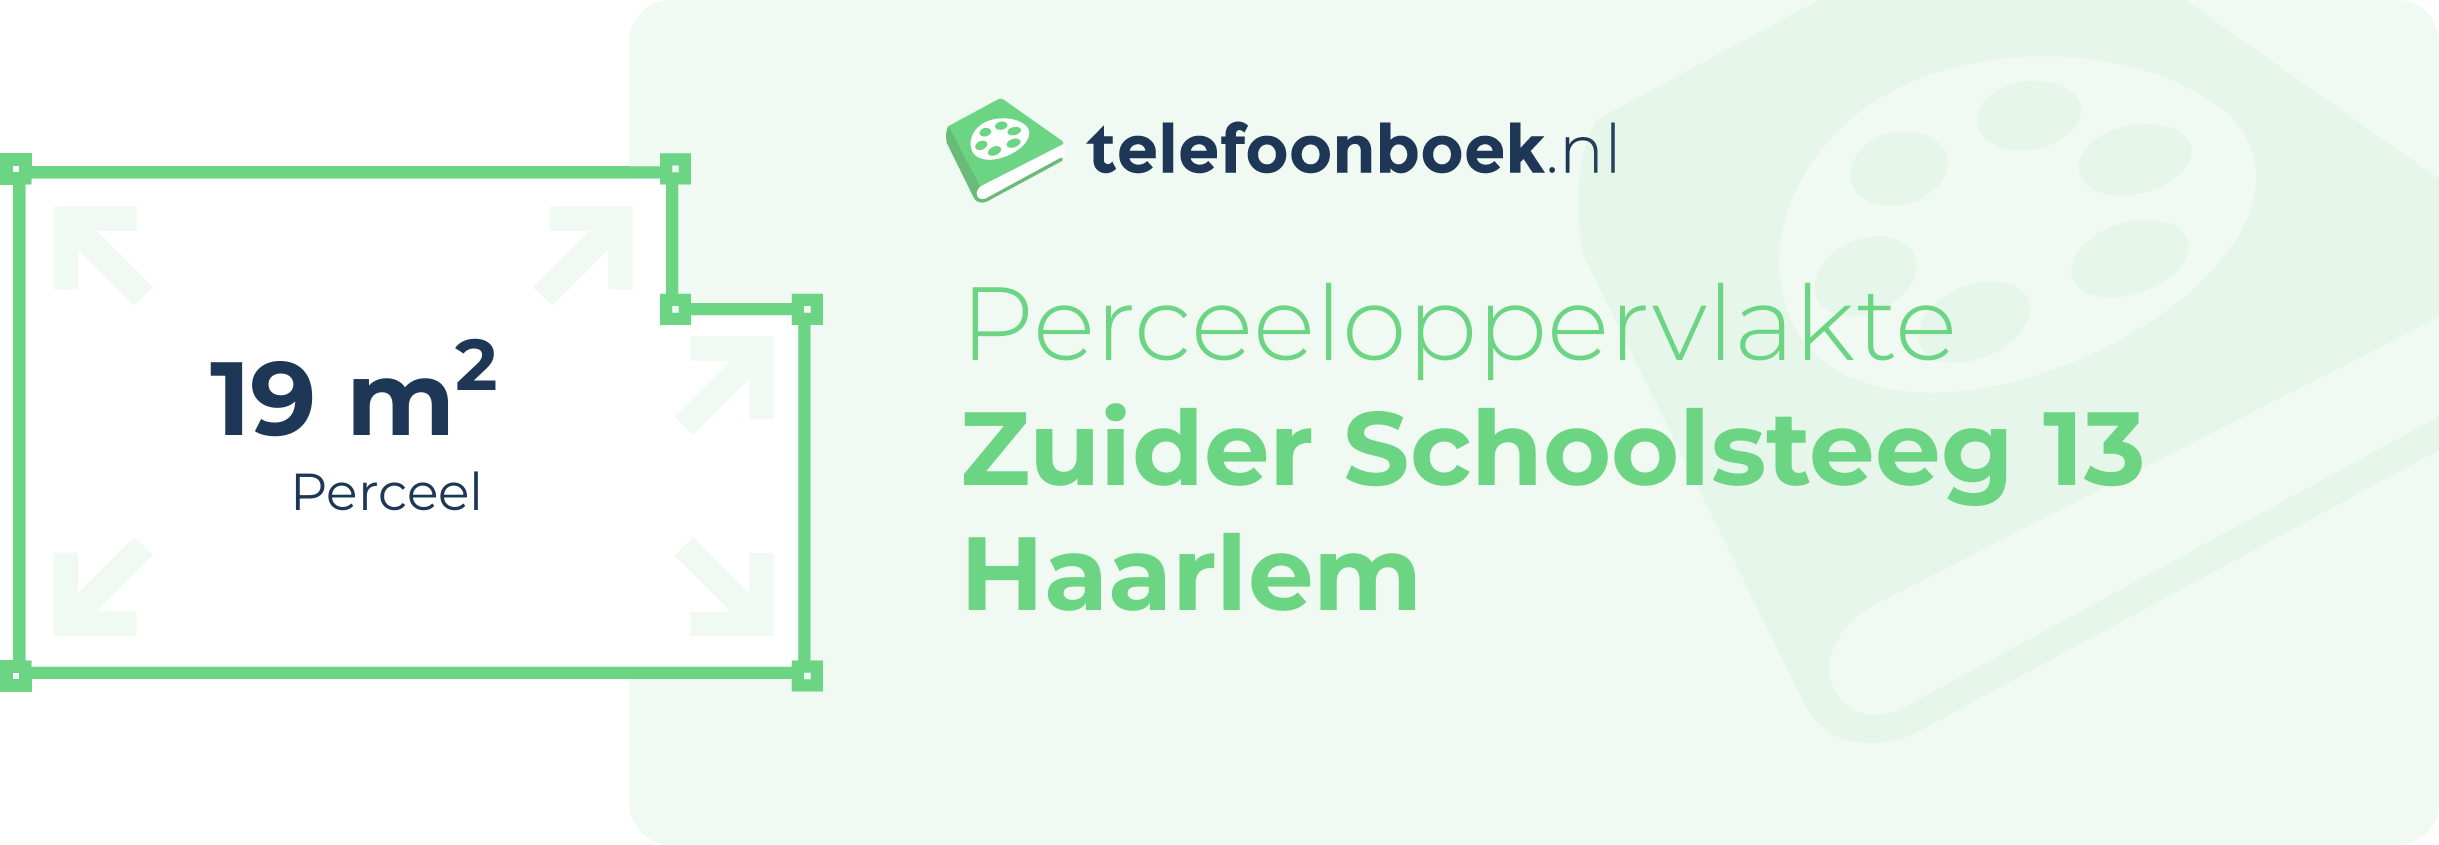 Perceeloppervlakte Zuider Schoolsteeg 13 Haarlem